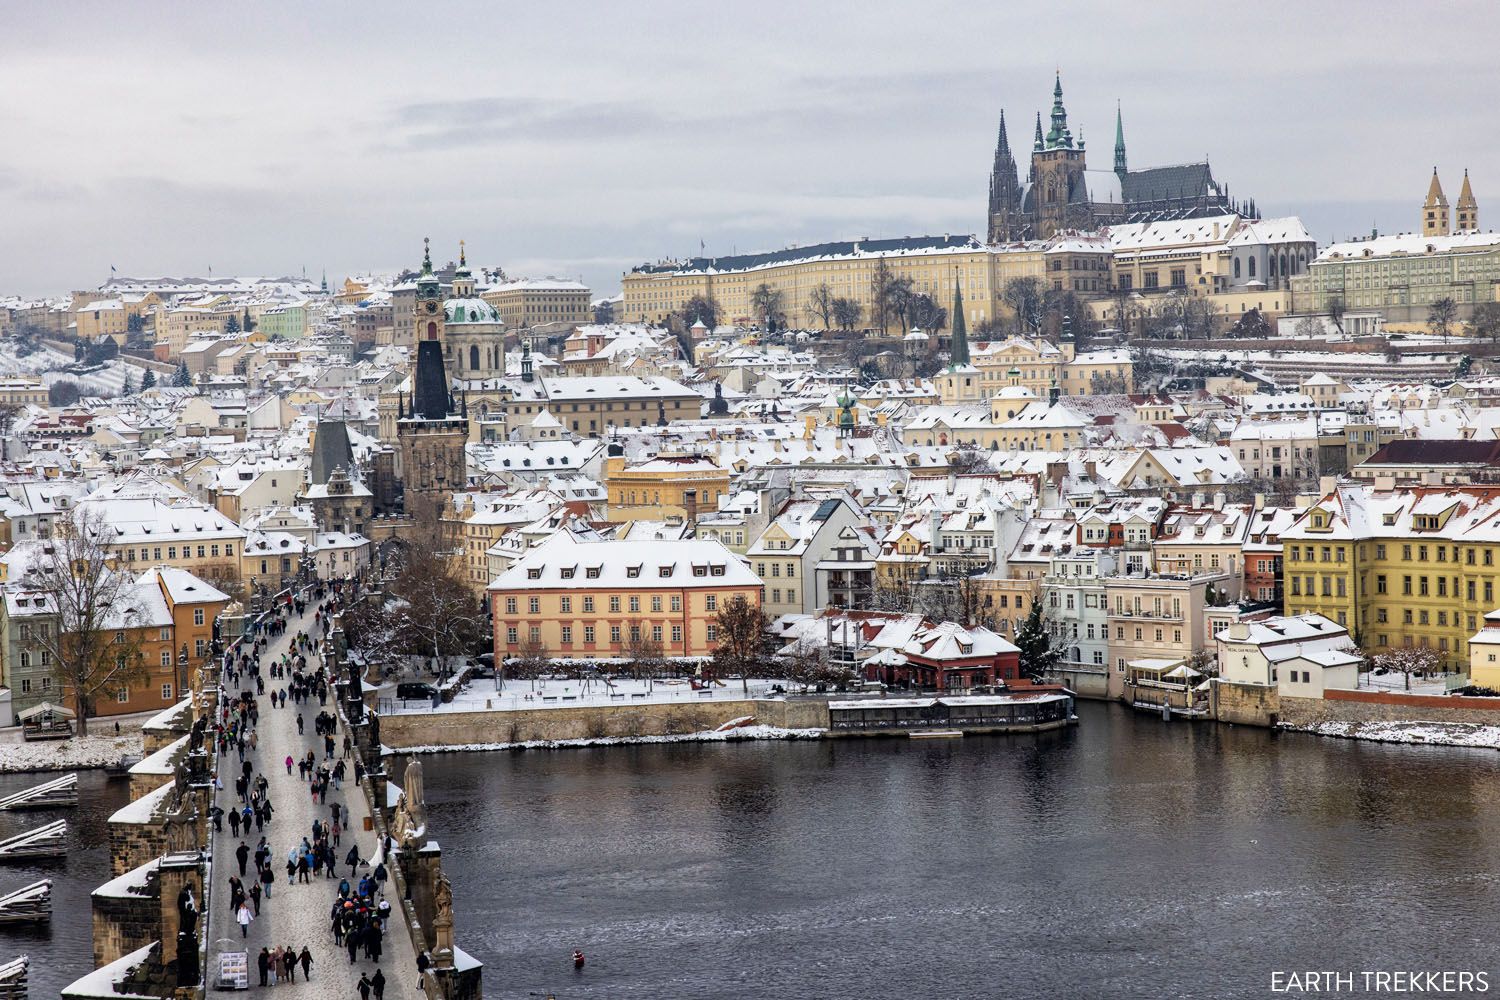 Visiting Prague in December